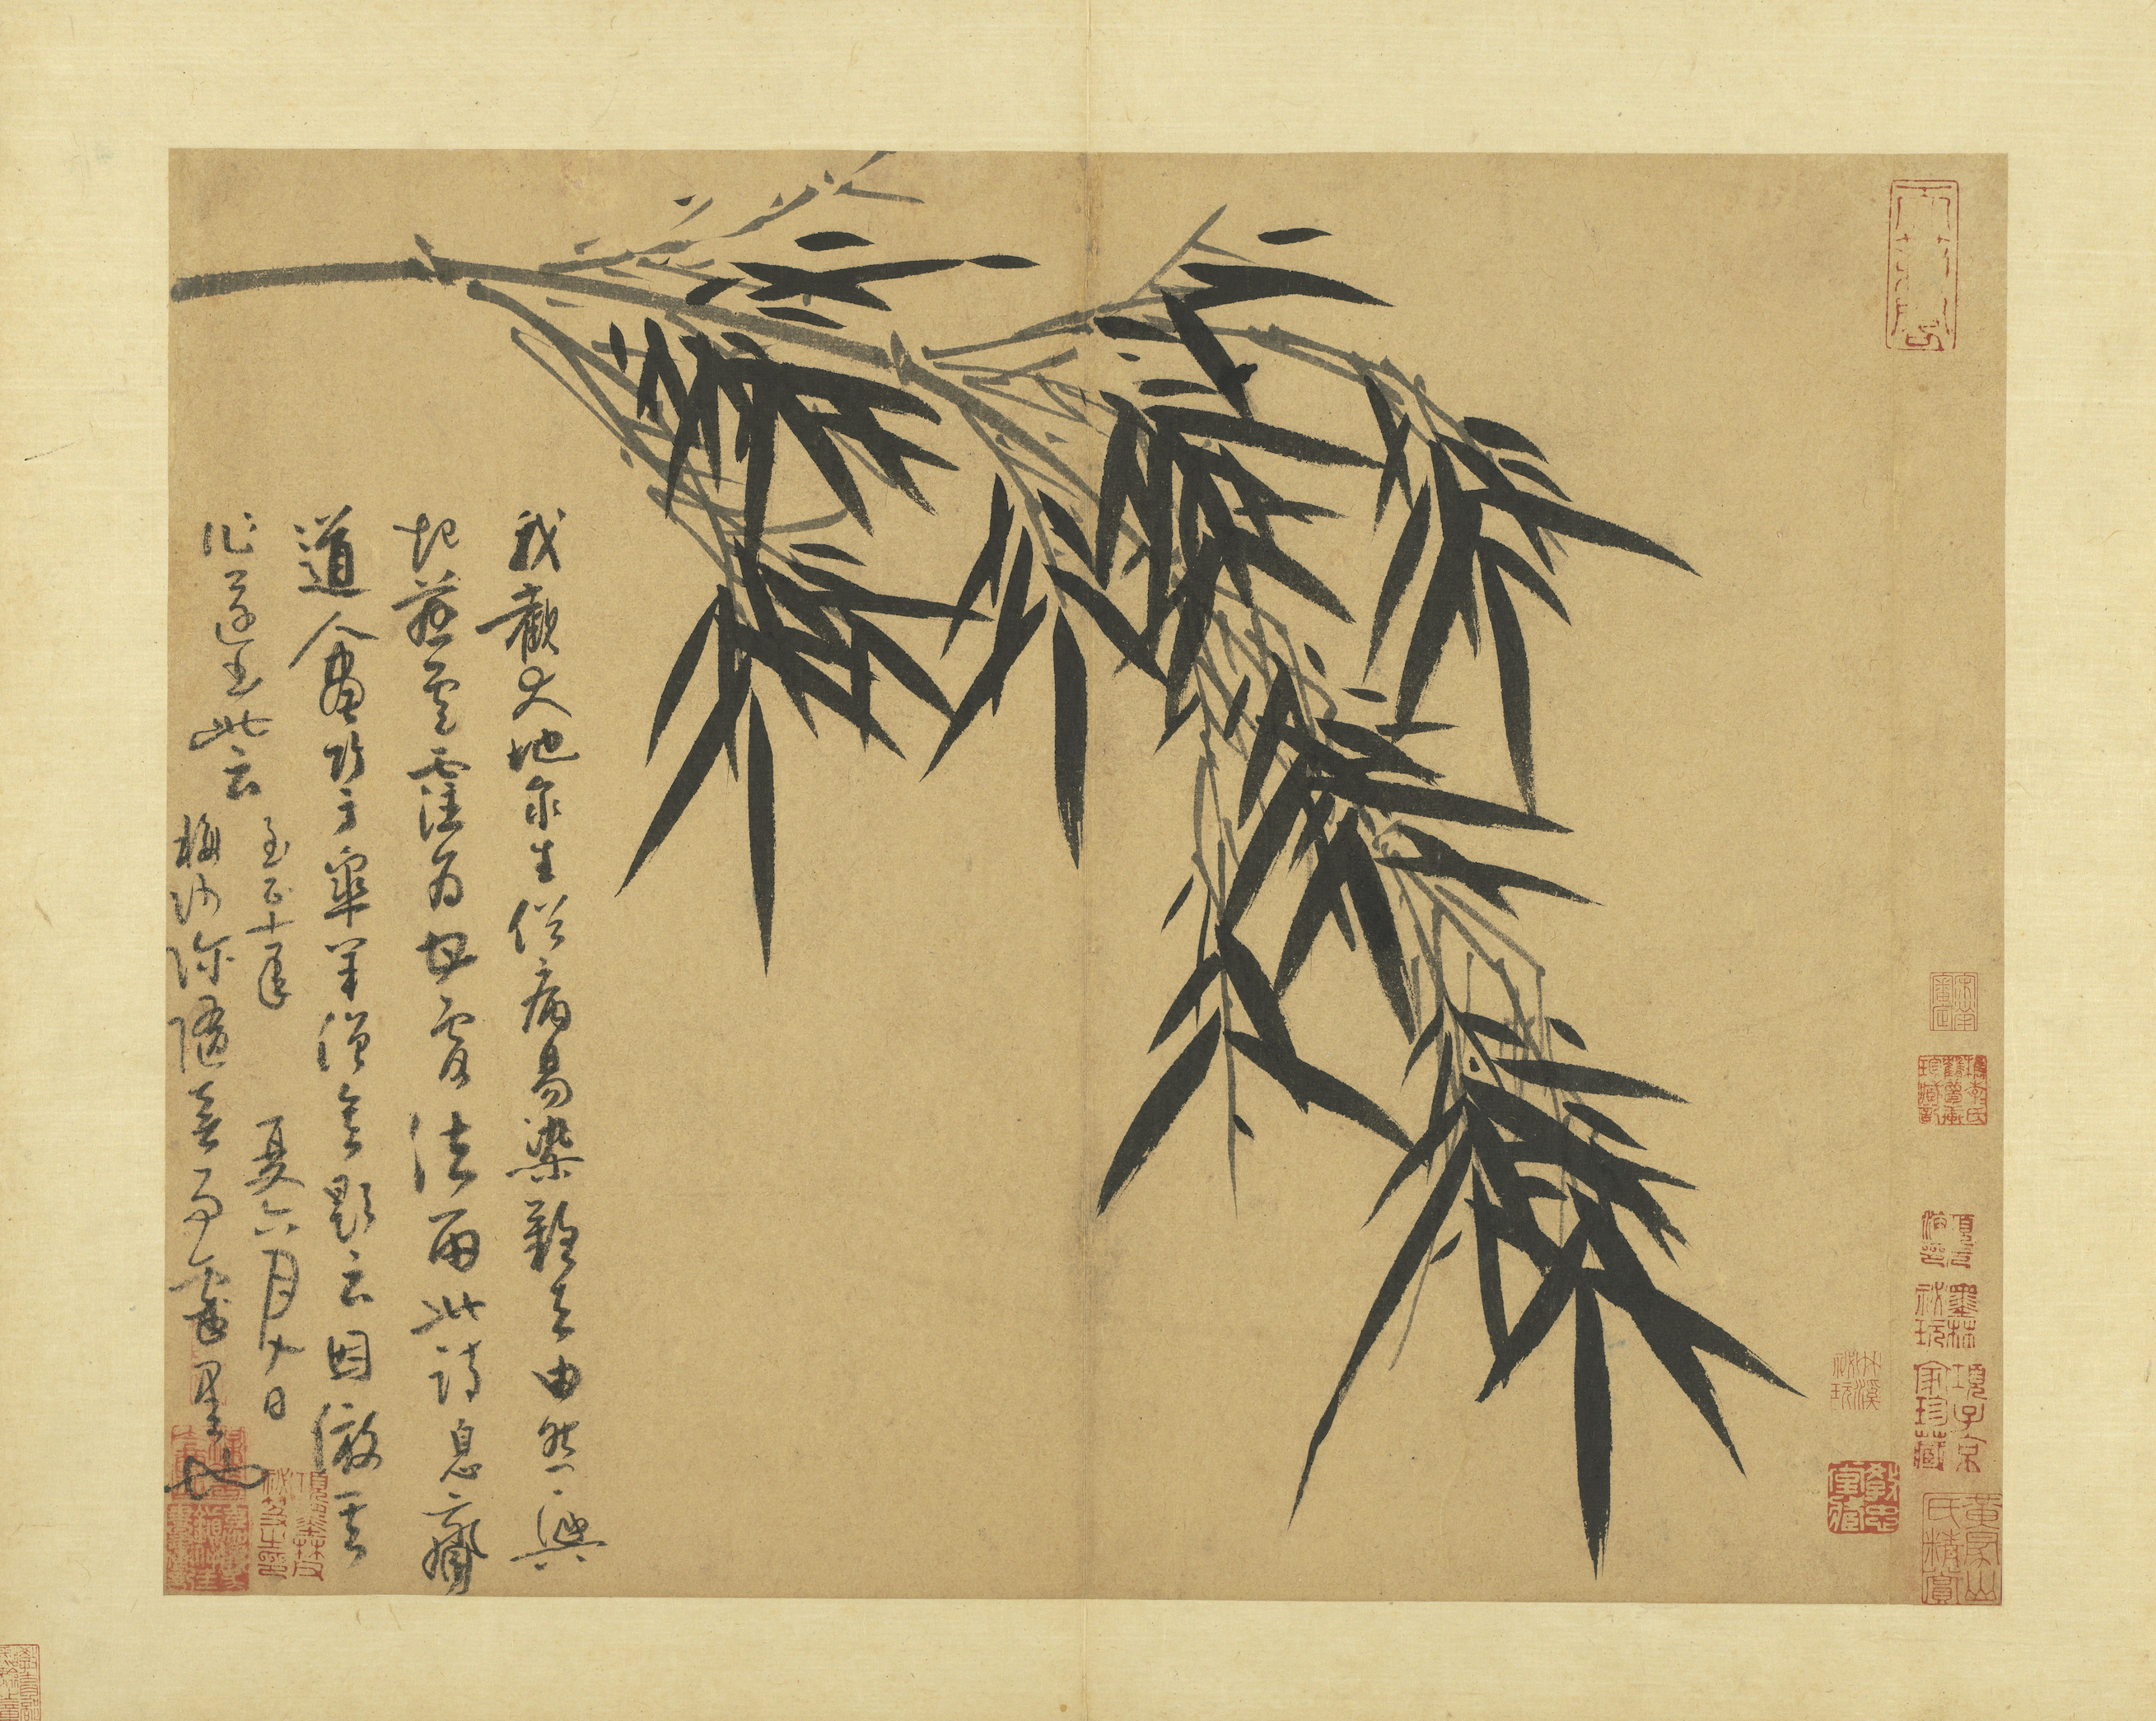 Painting Bamboo in Imitation of Xizhai (Li Kan)